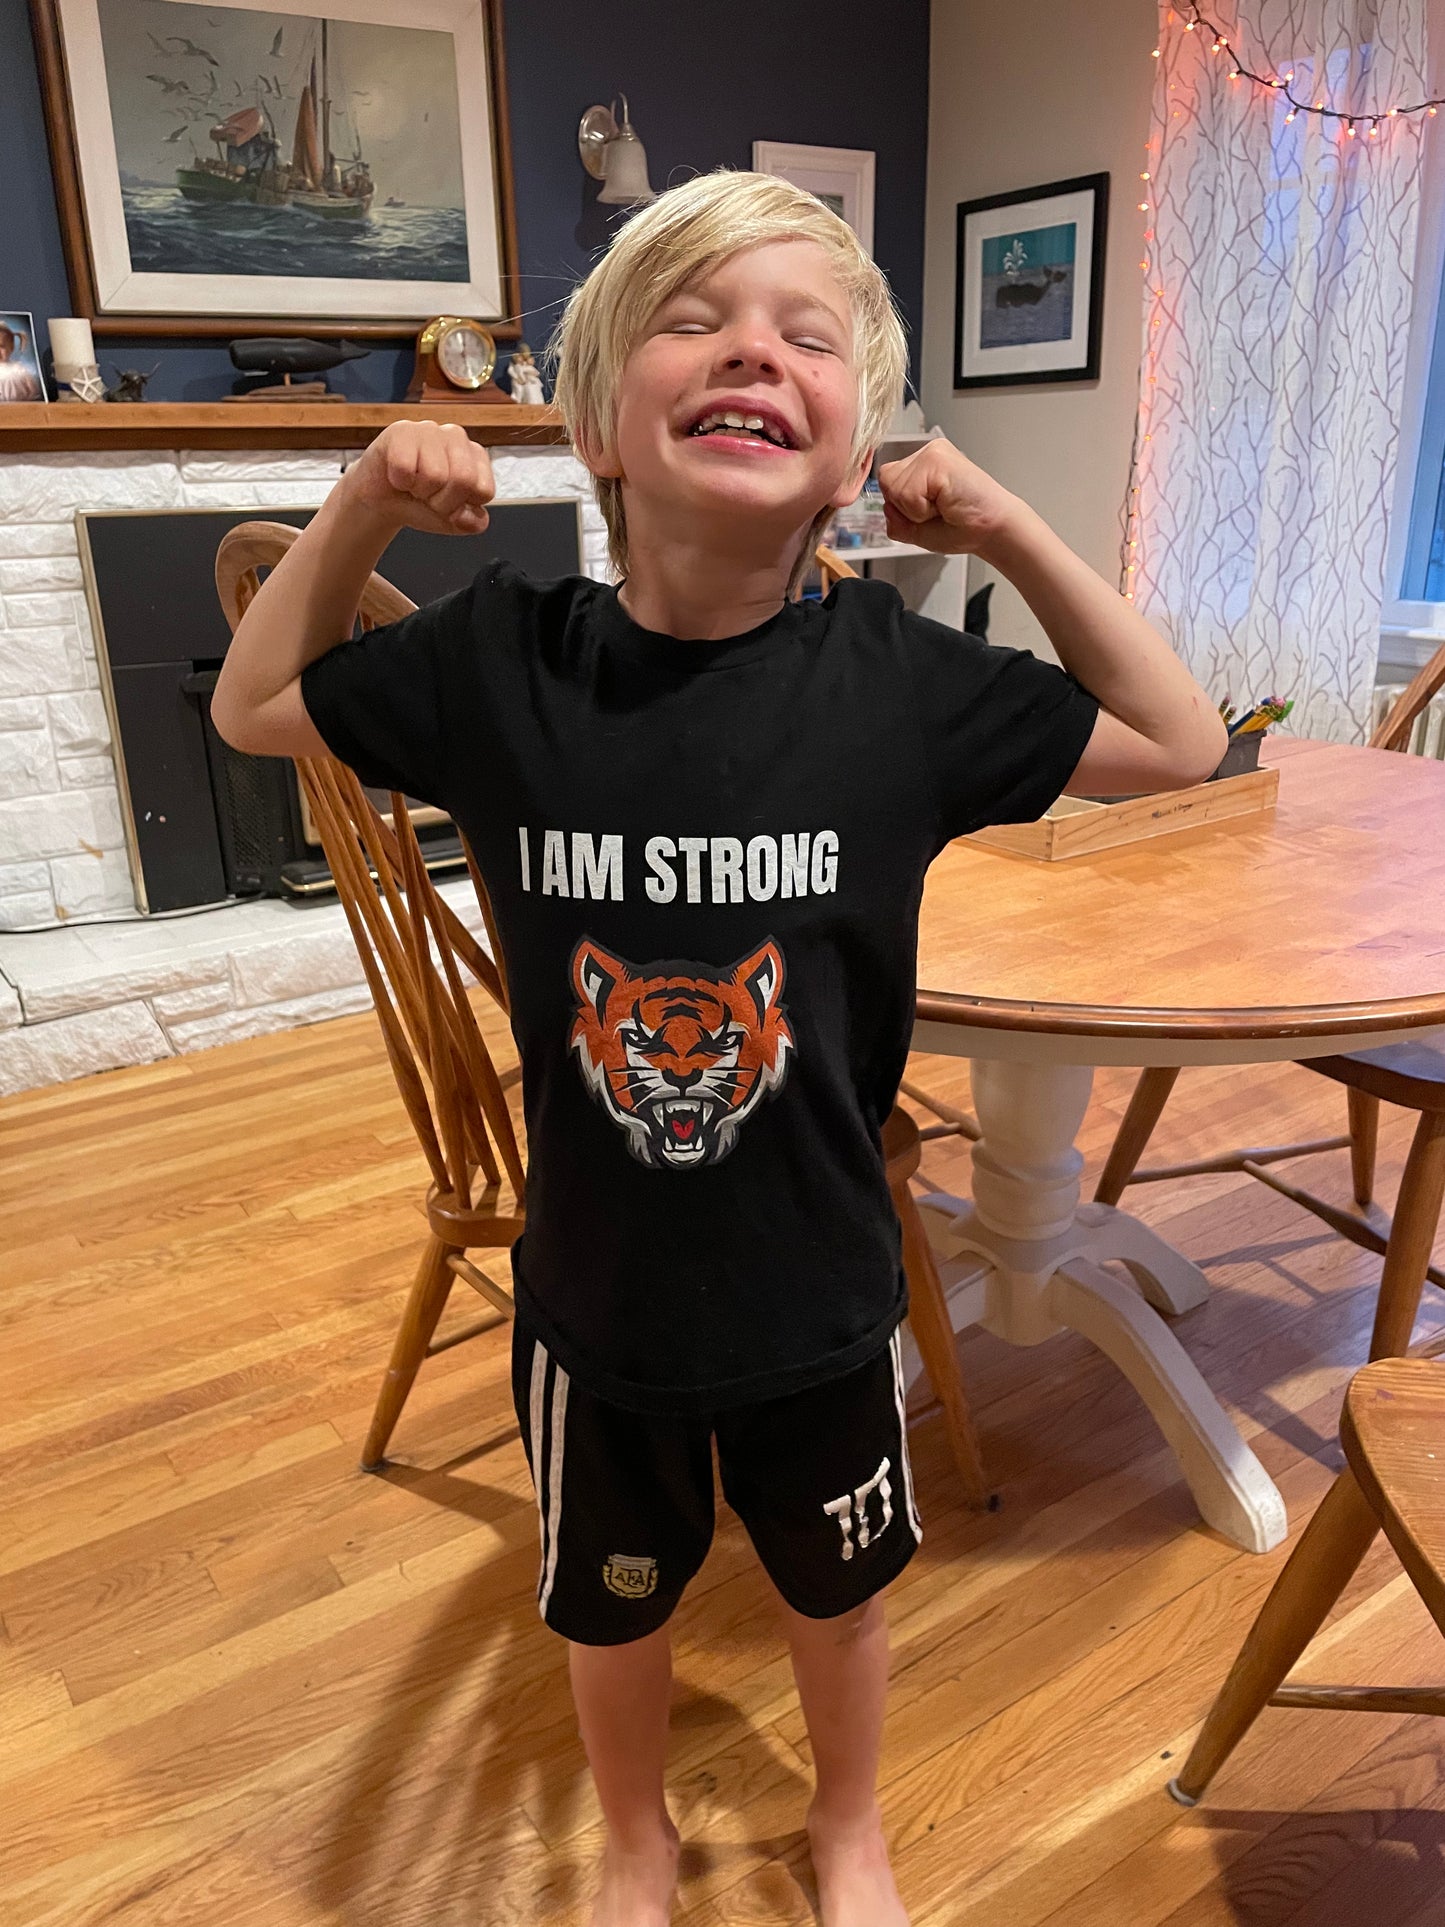 “I AM STRONG” black kids affirmation tee shirt